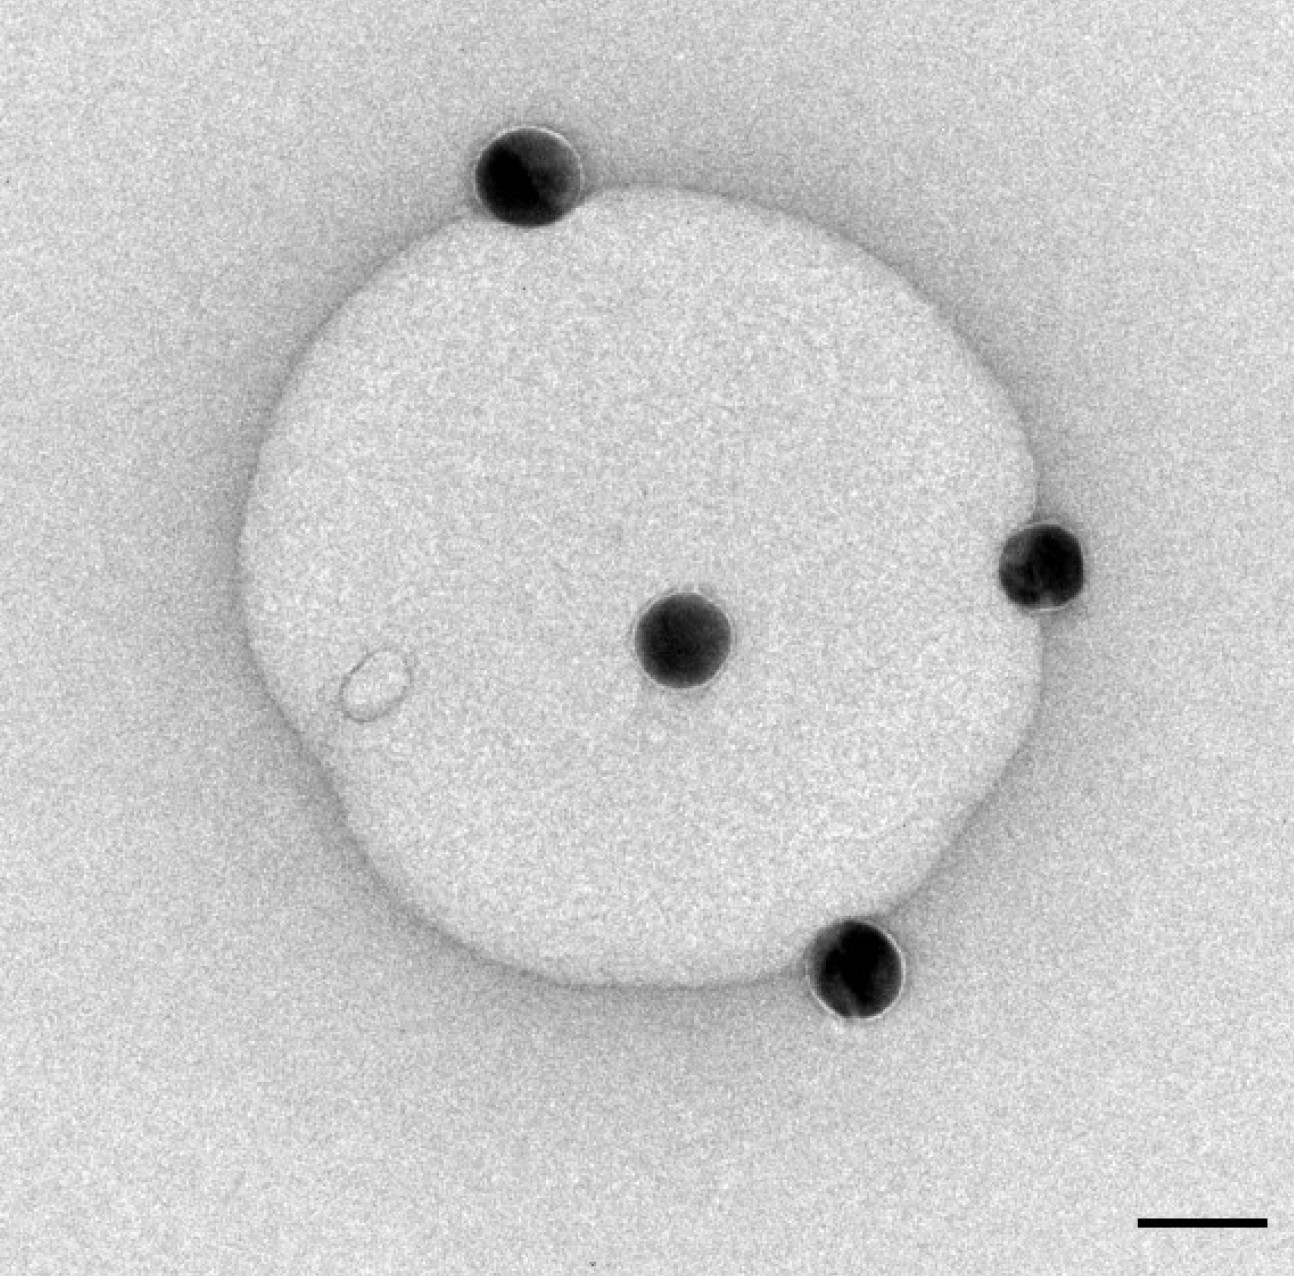 nanoparticles affect biological membranes